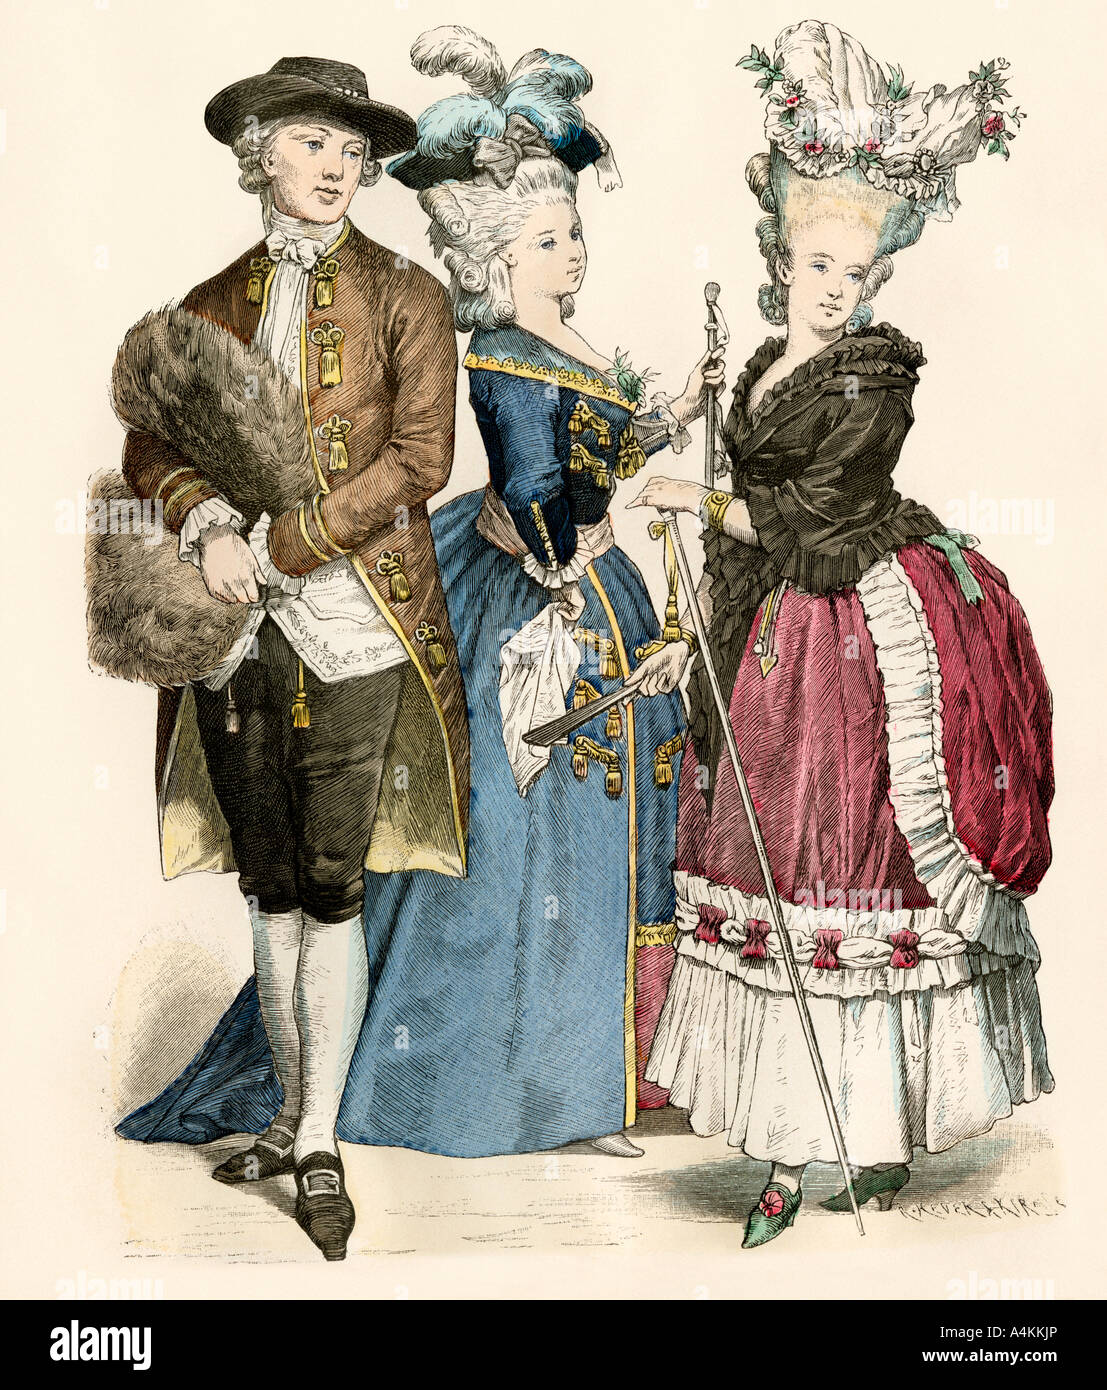 late 1700s fashion